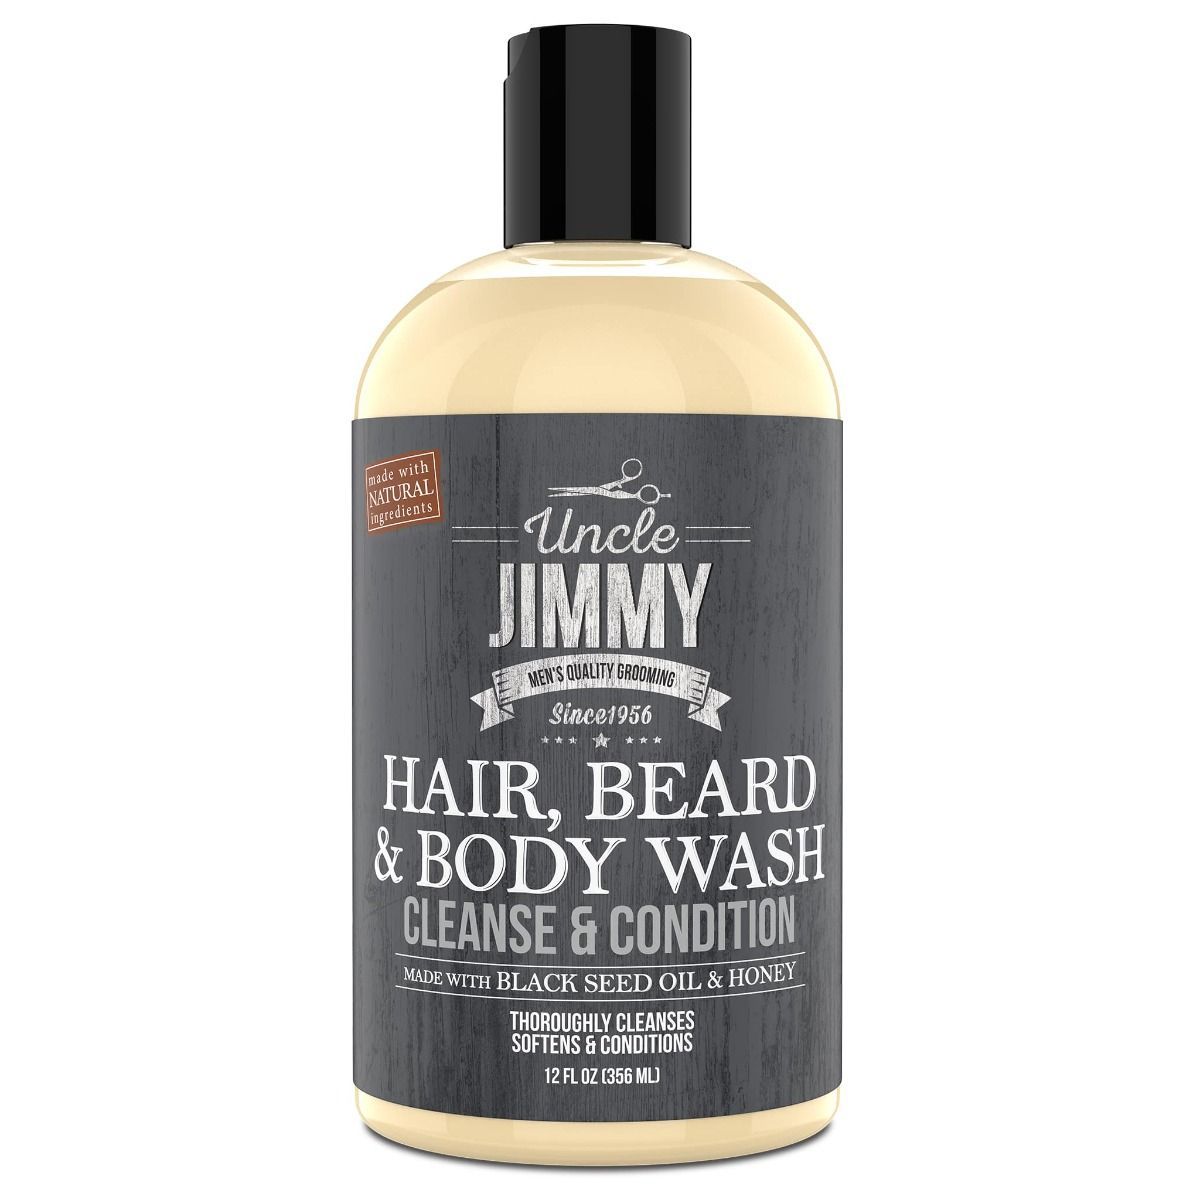 Farbror Jimmy Hair Beard & Body Wash 12oz / 356ml